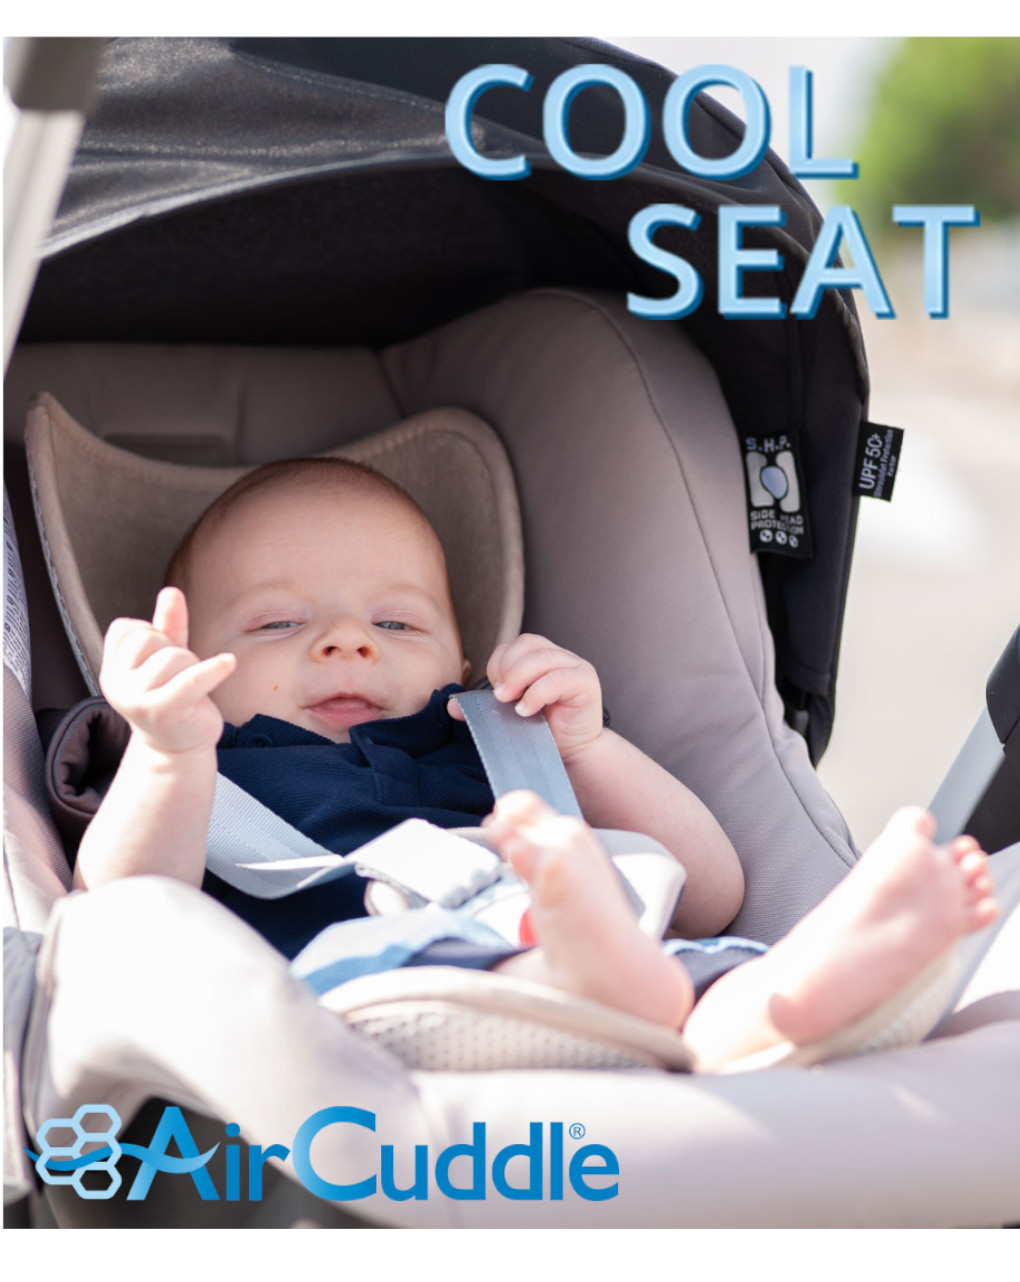 Cool seat foderina sabbia gruppo 0 - aircuddle - AirCuddle